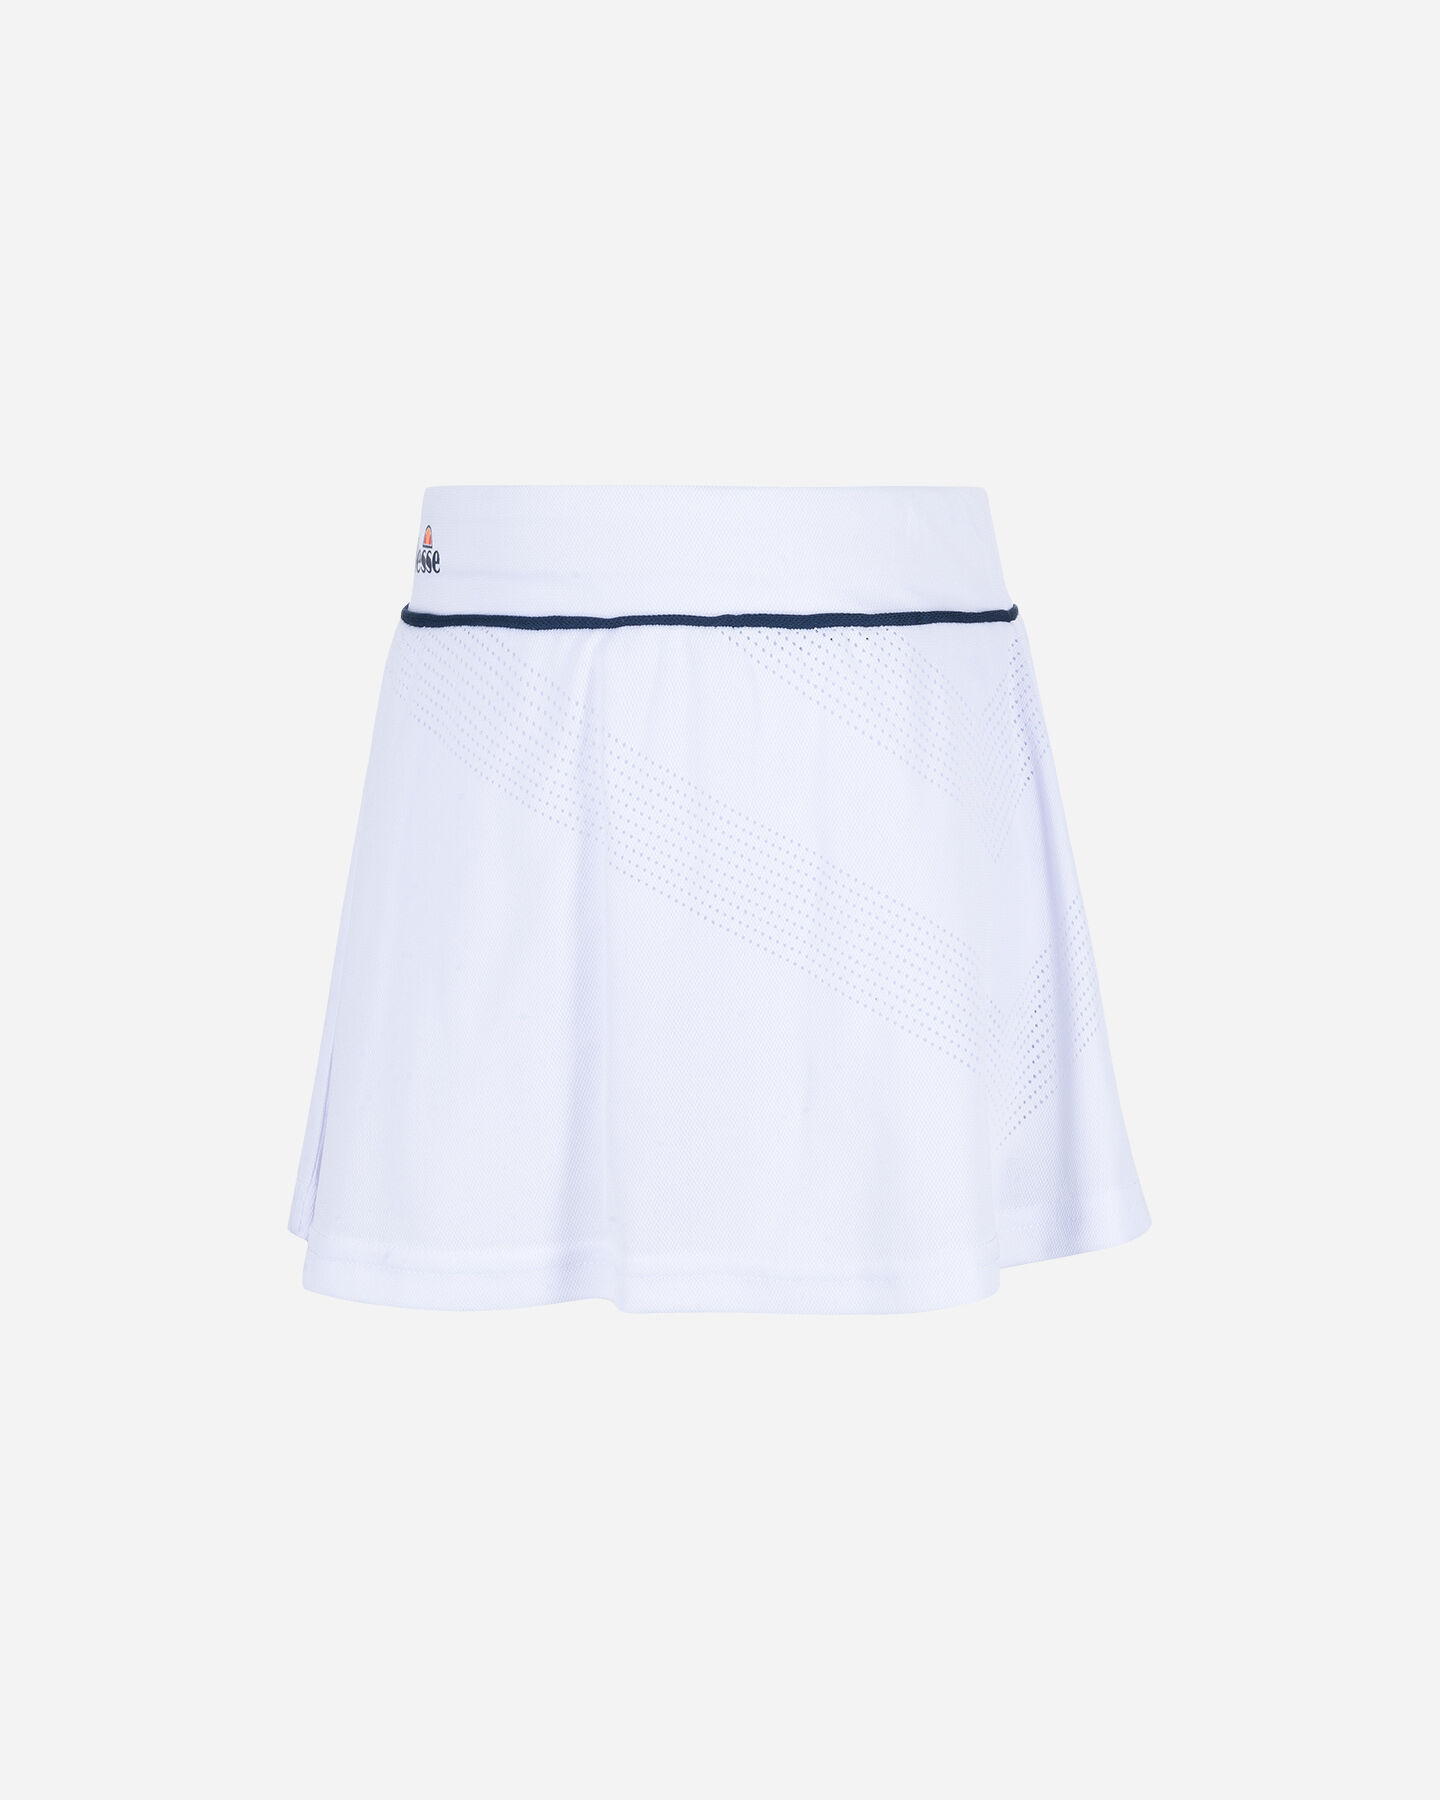  Pantalone tennis ELLESSE CLASSIC TENNIS JR S4075625|001|6A scatto 0